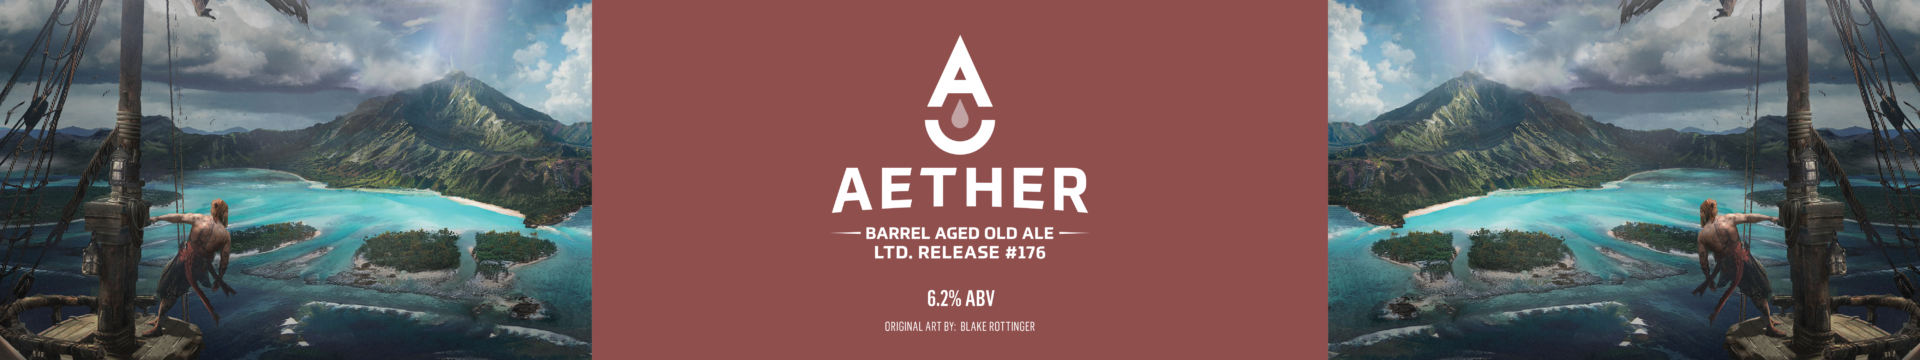 Aether #176 Barrel Aged Old Ale Banner